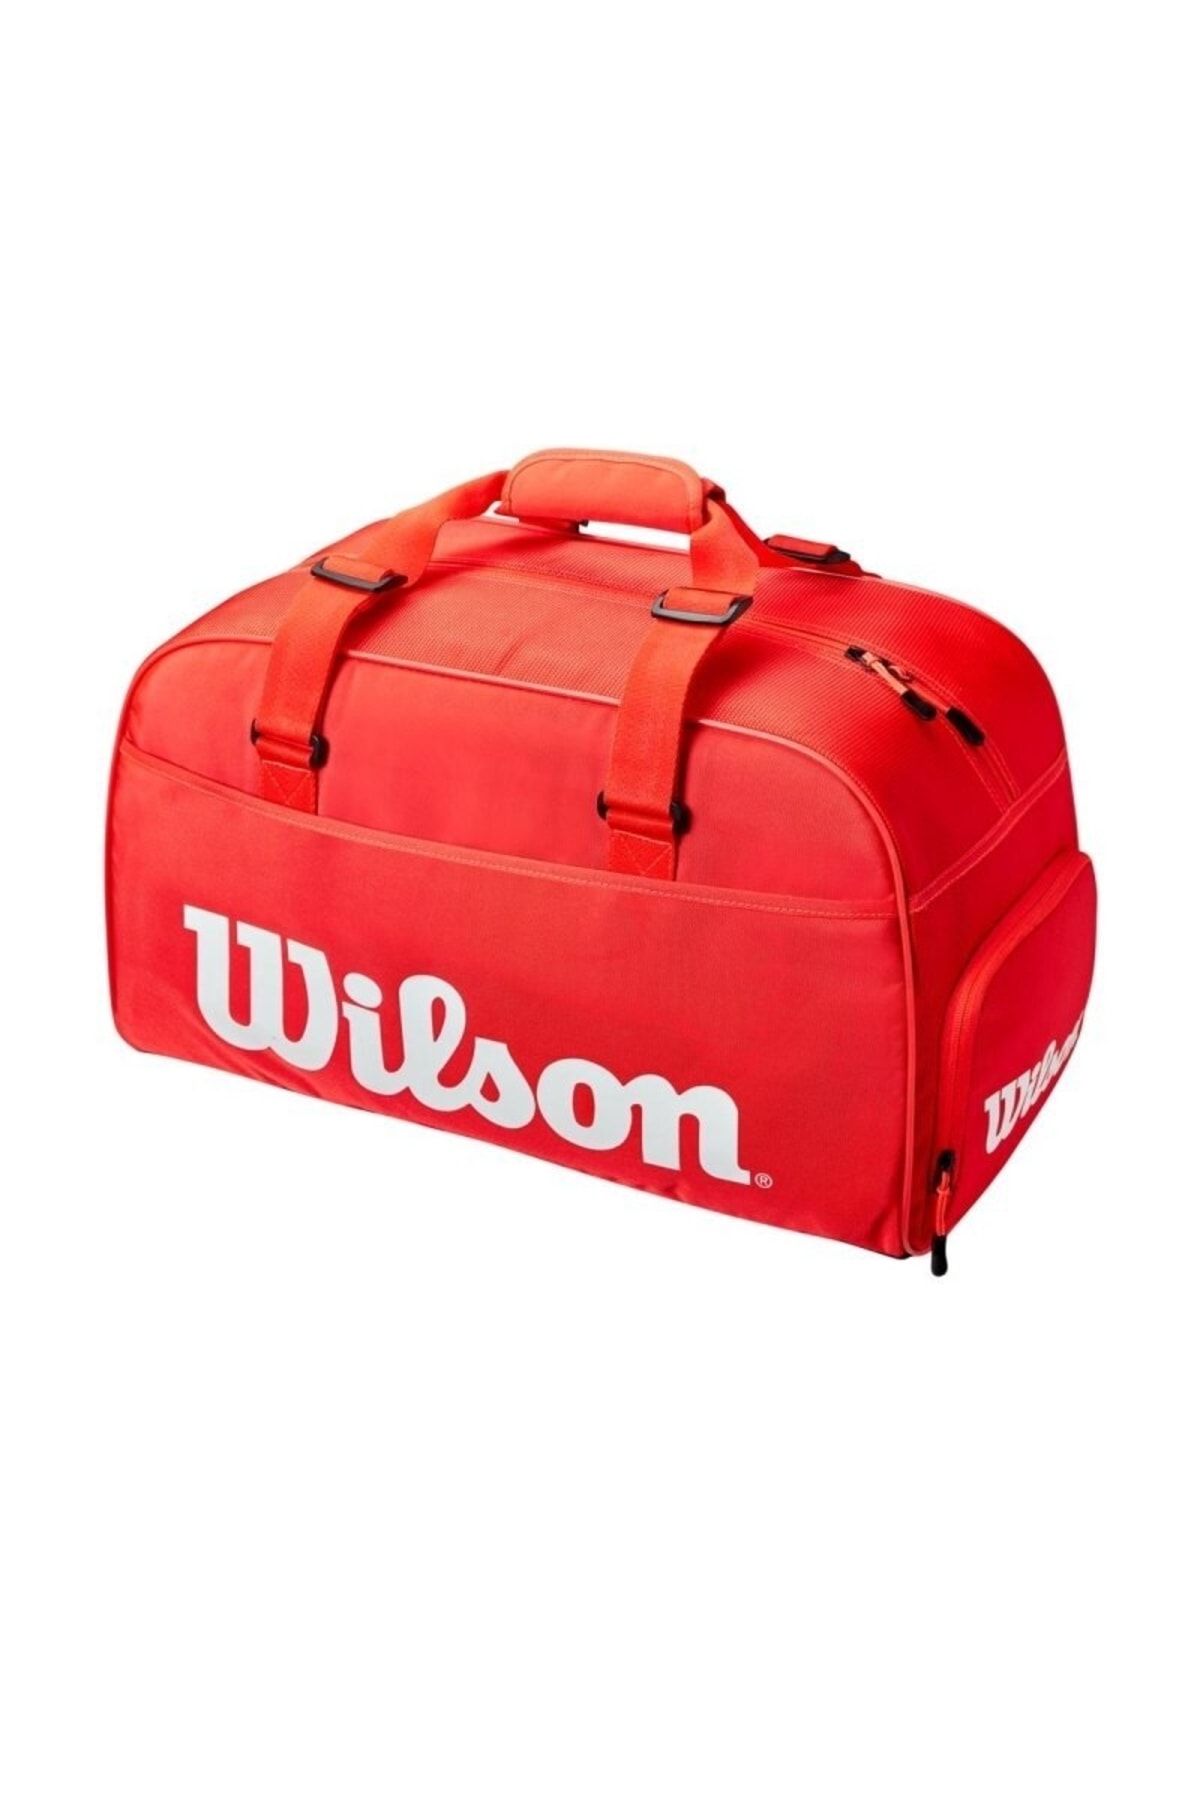 Wilson Super Tour Small Duffel Infrared Wr8011001001